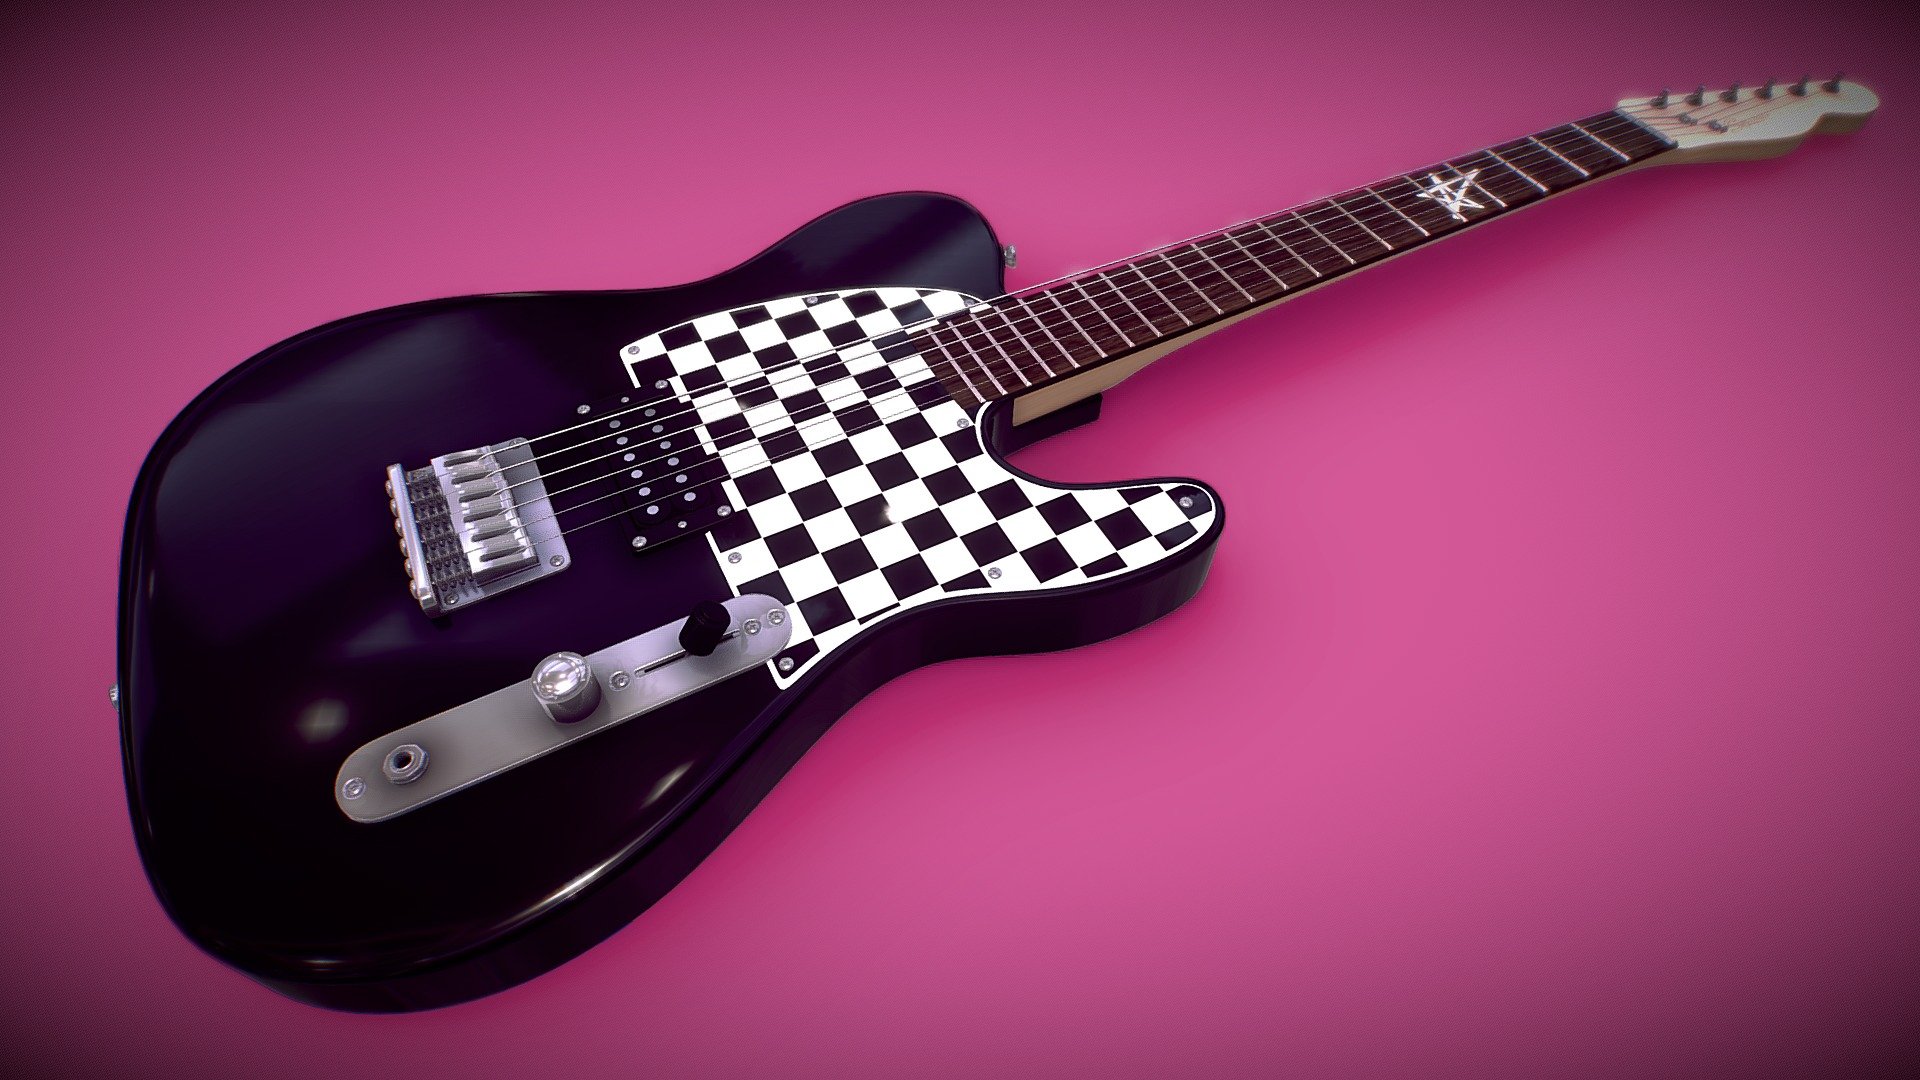 Fender Squier Telecaster Avril Lavigne Signature   Download Free